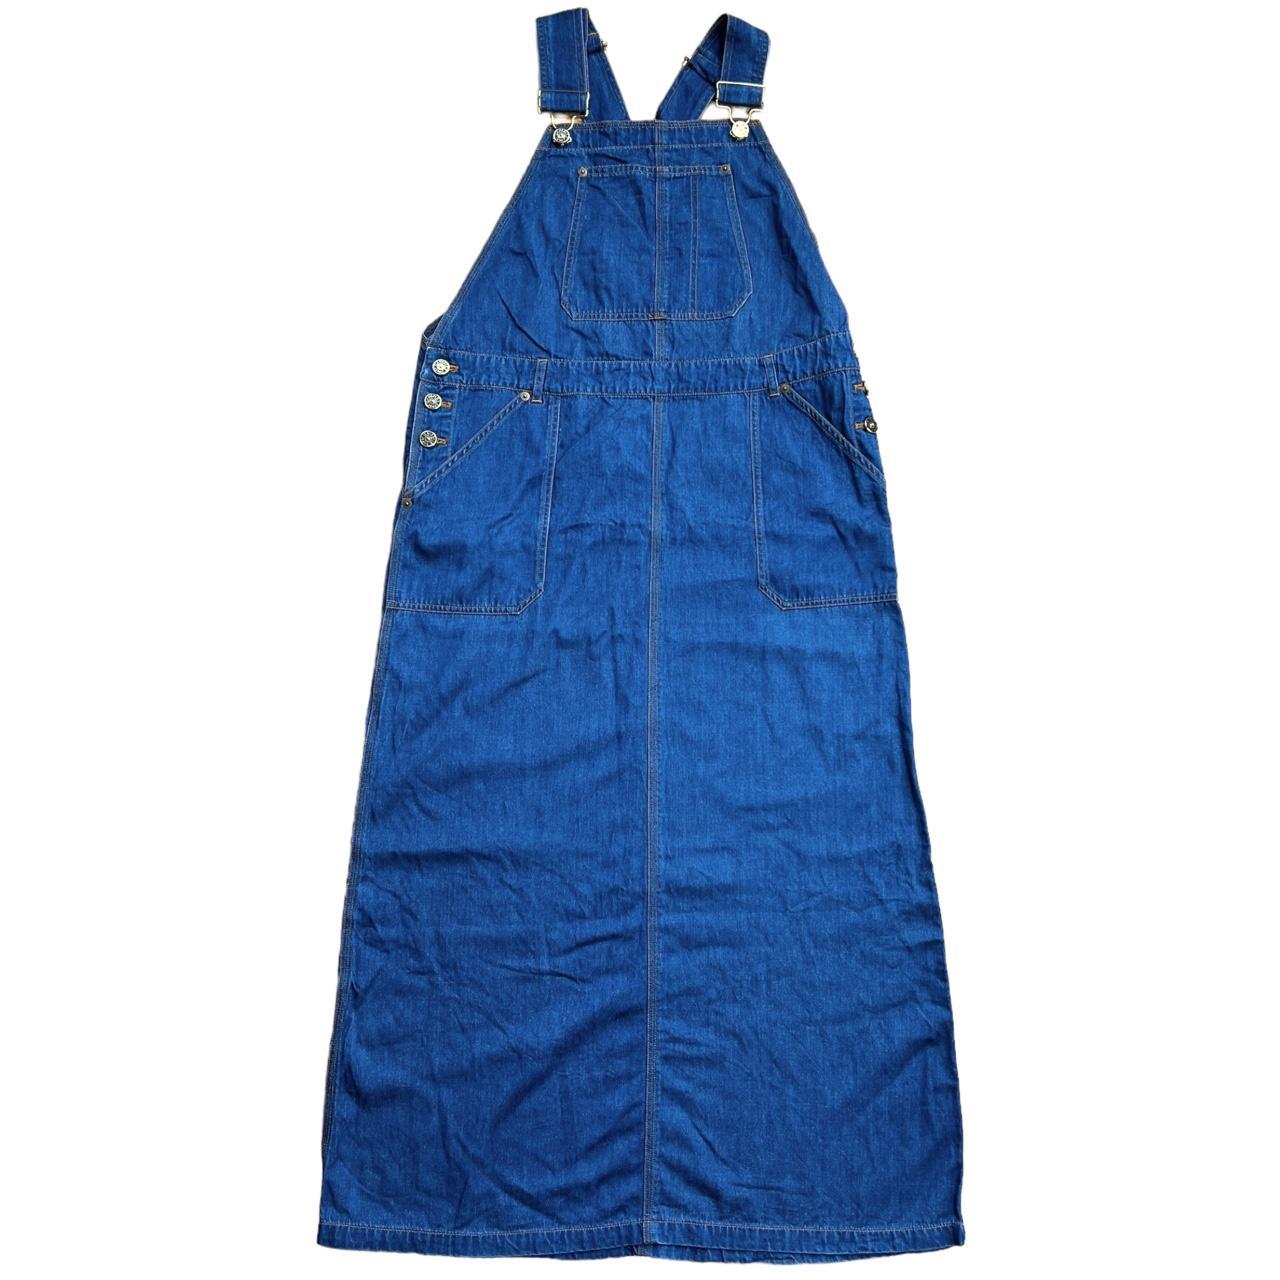 Gaultier Jeans Women's Blue and Navy Dress